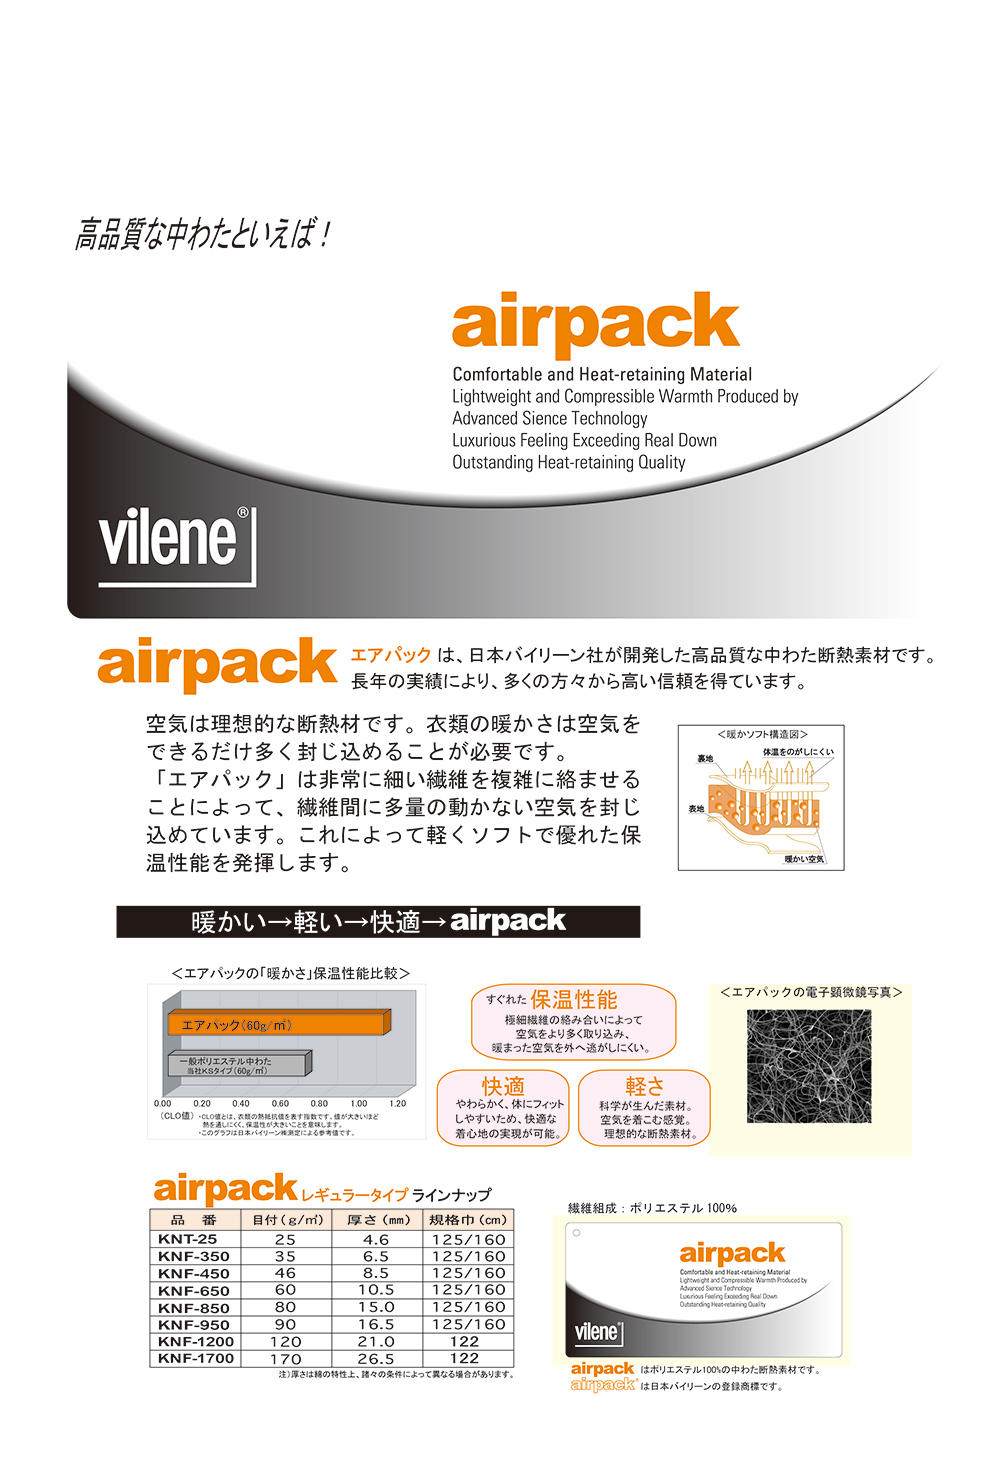 KNF1200 쿠션솜 에어 팩 120g[심지] vilene (일본 바이린)